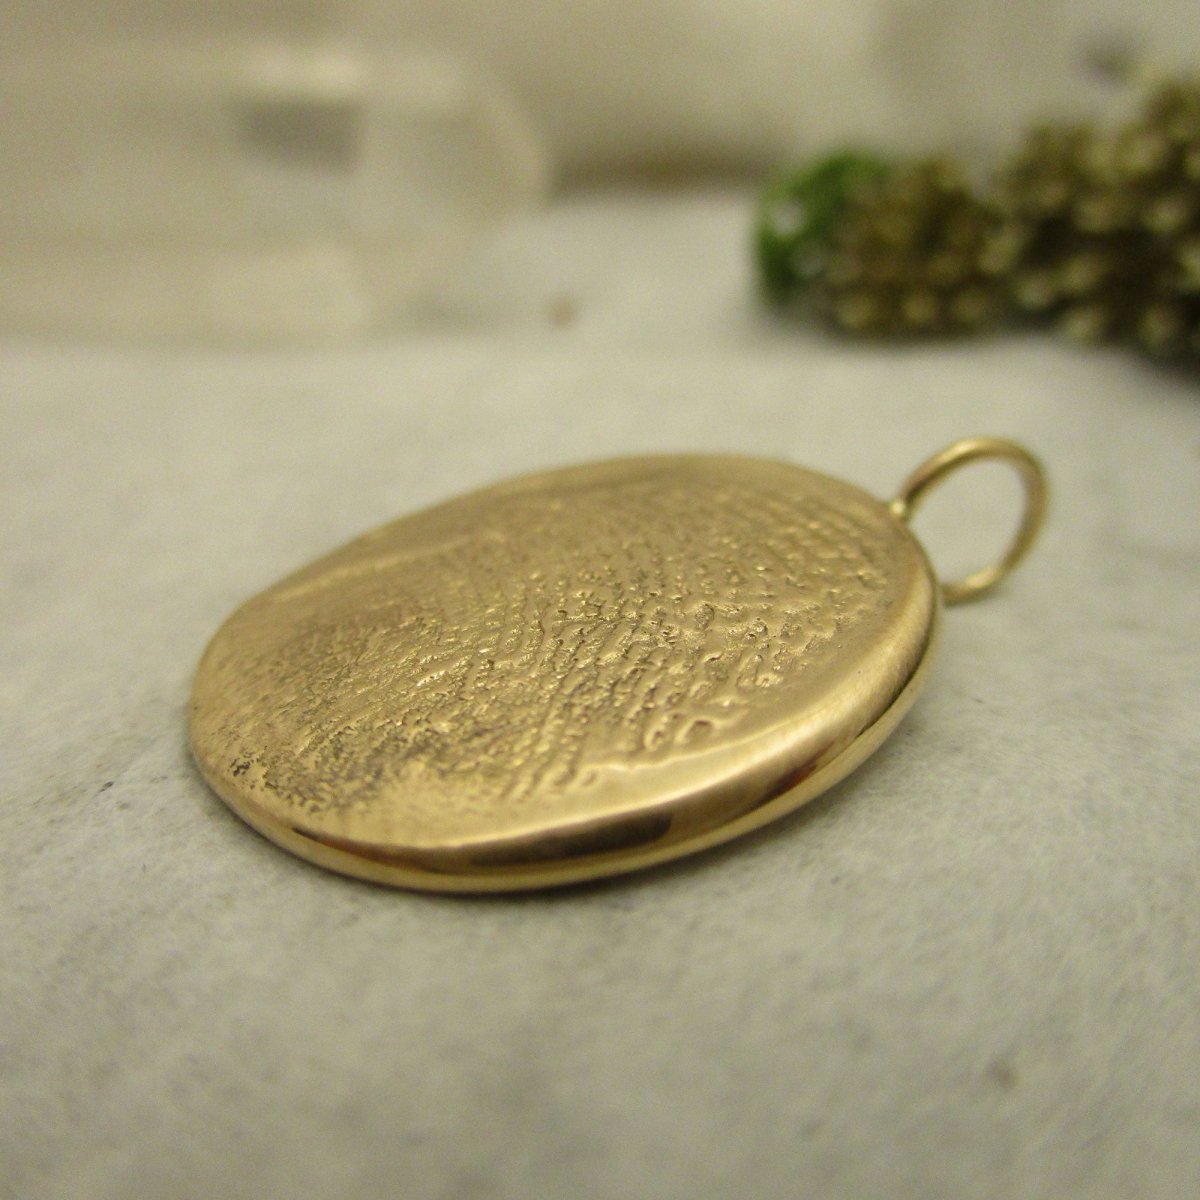 14k Gold Organic Oval Shaped Fingerprint Pendant from Flat Ink Print - Luxe Design Jewellery